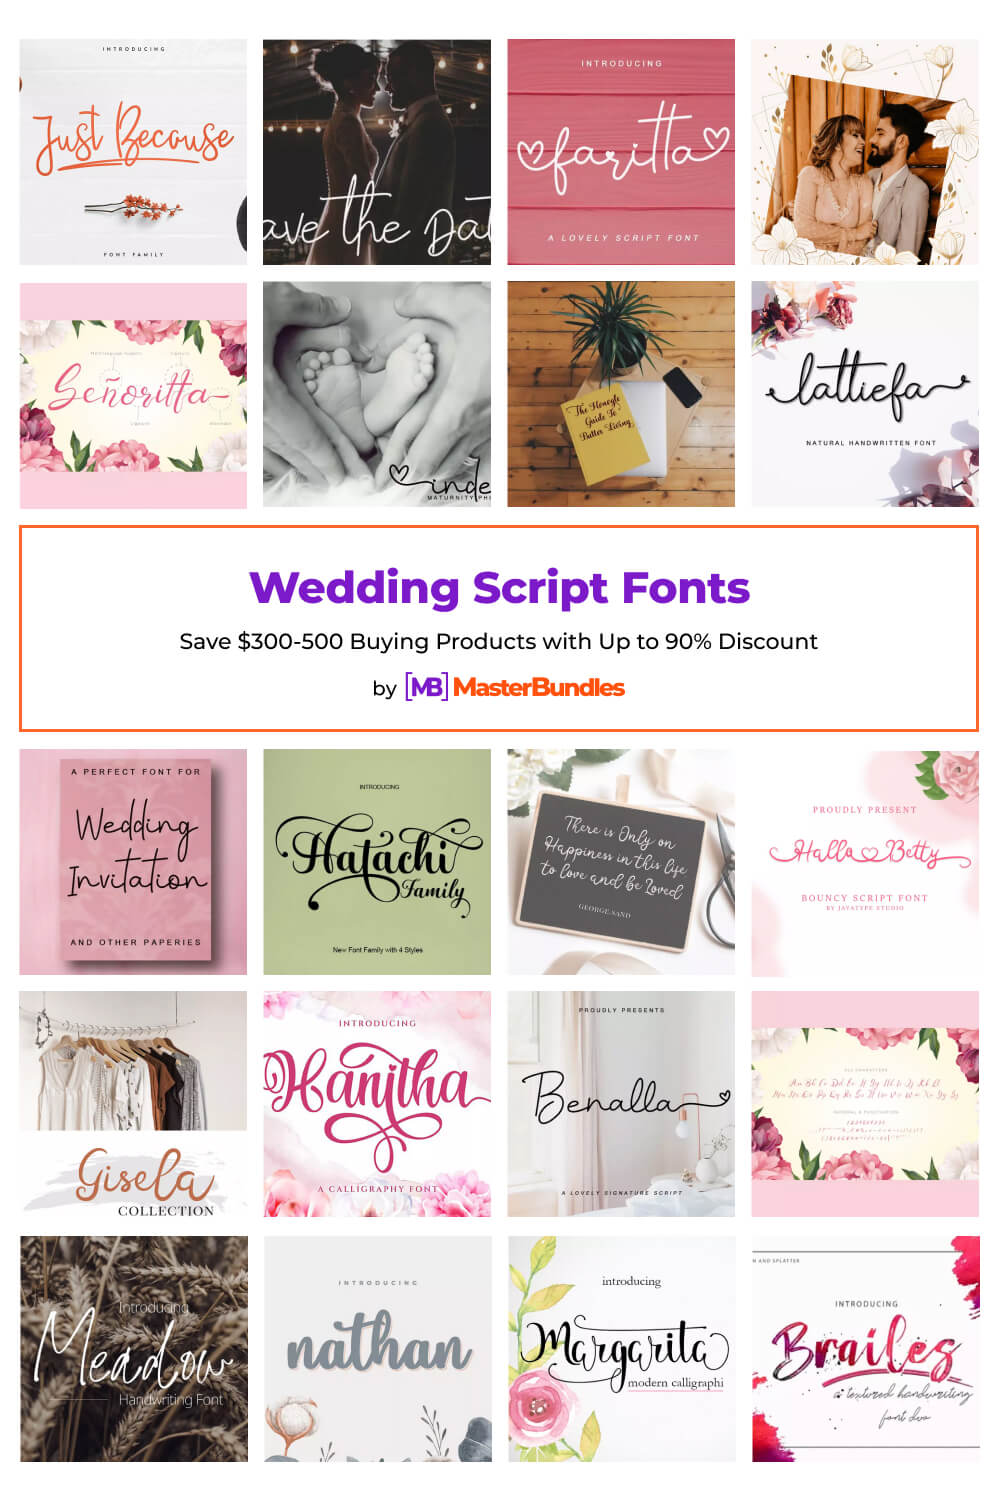 wedding script fonts pinterest image.